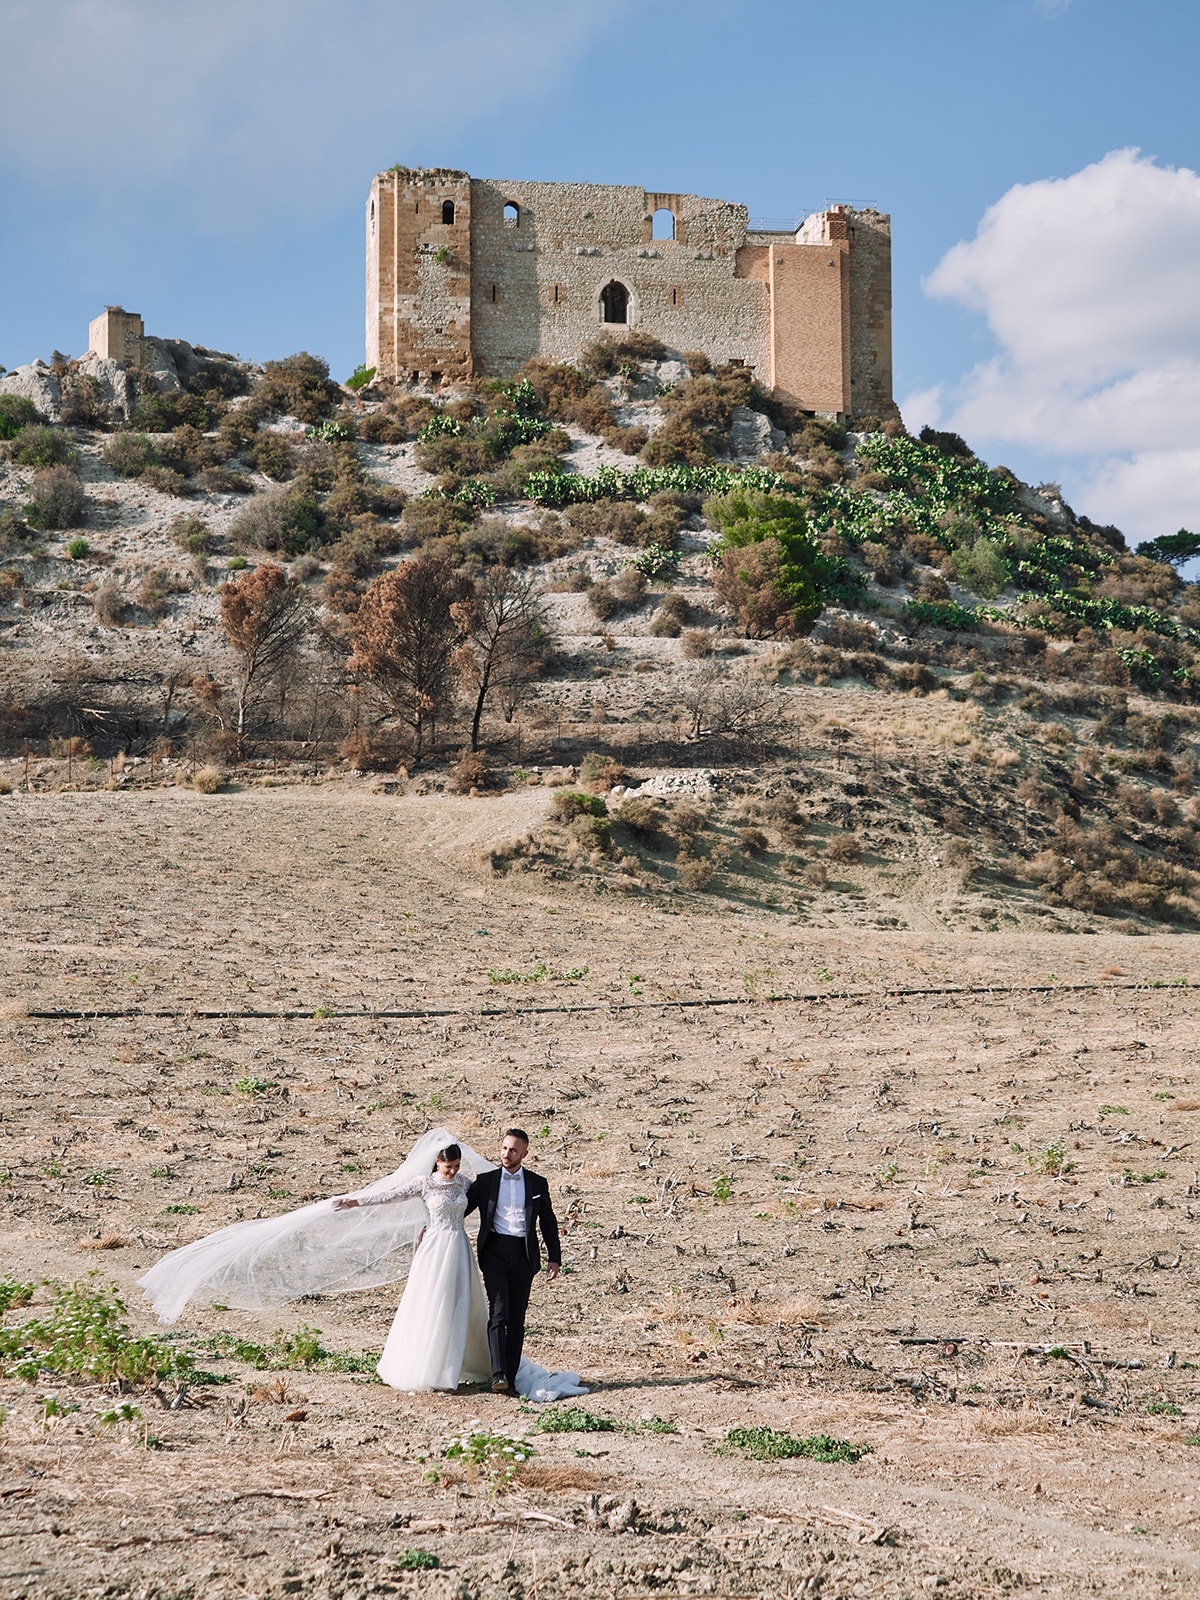 Marianna and Mattia's magical wedding in Sicily